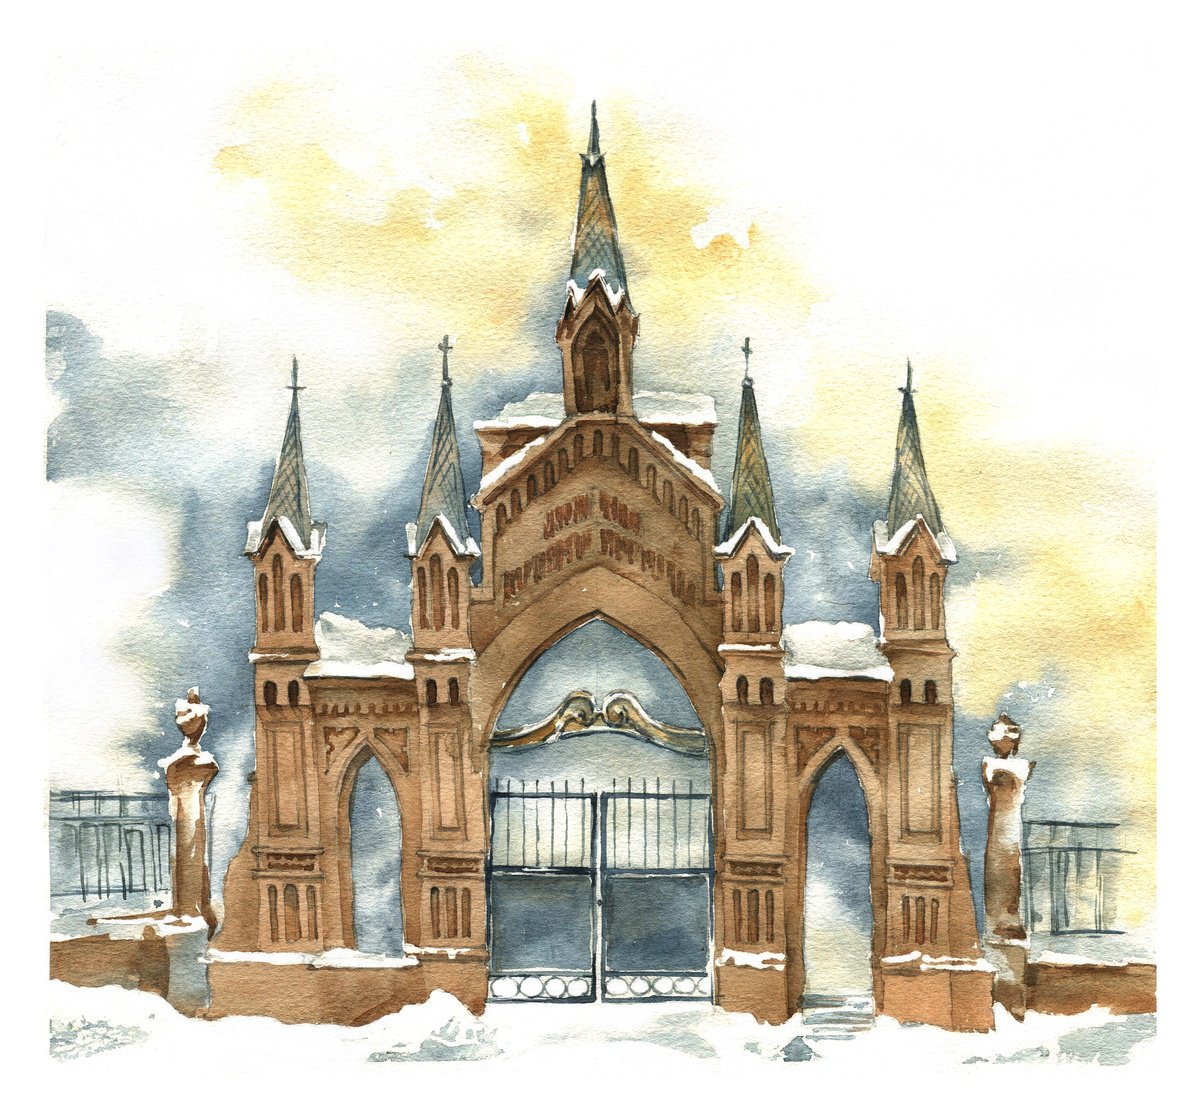 Brick gate architectural sketch in watercolor by Ksenia Selianko